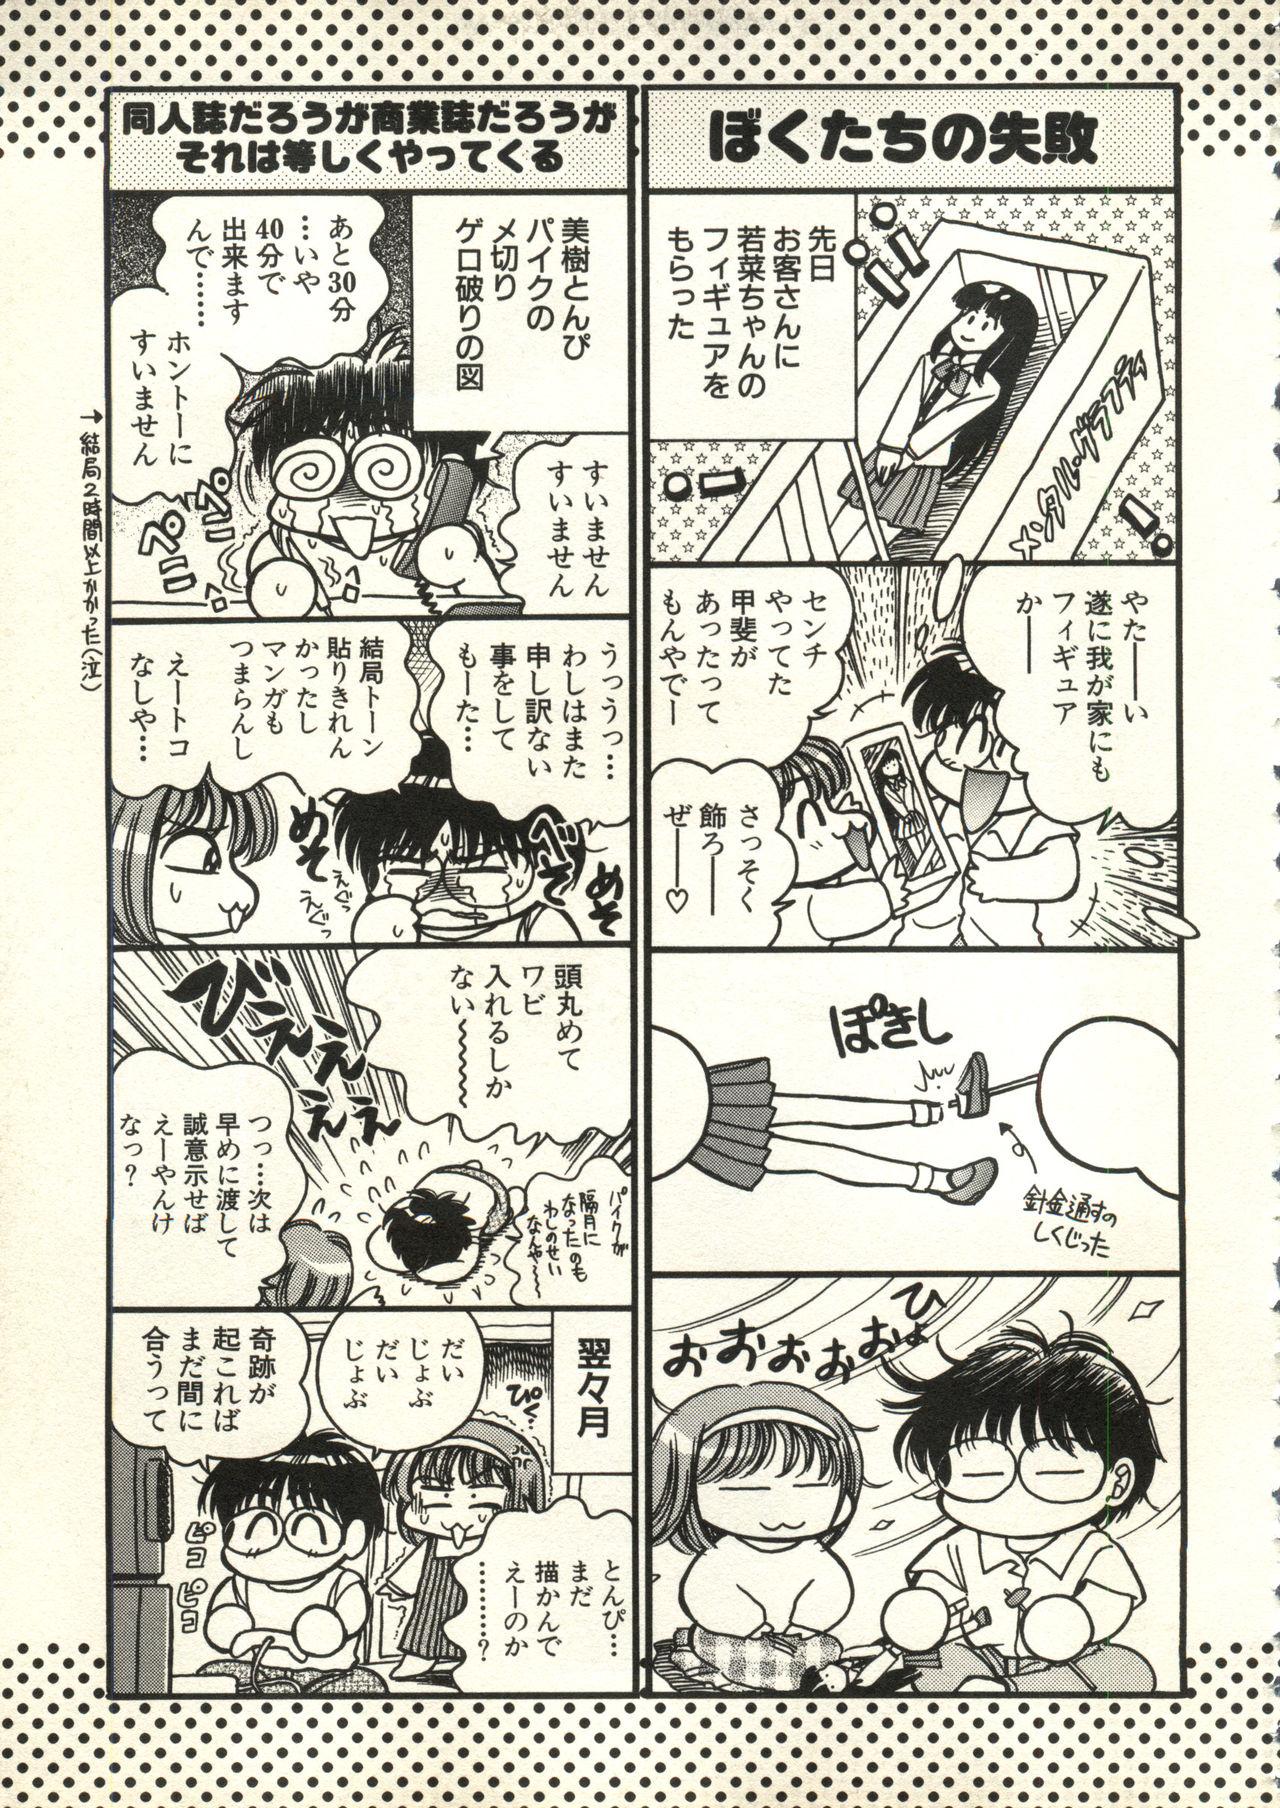 [Anthology] Bishoujo Shoukougun V3 (1) '99 Summer Edition (Various) 163